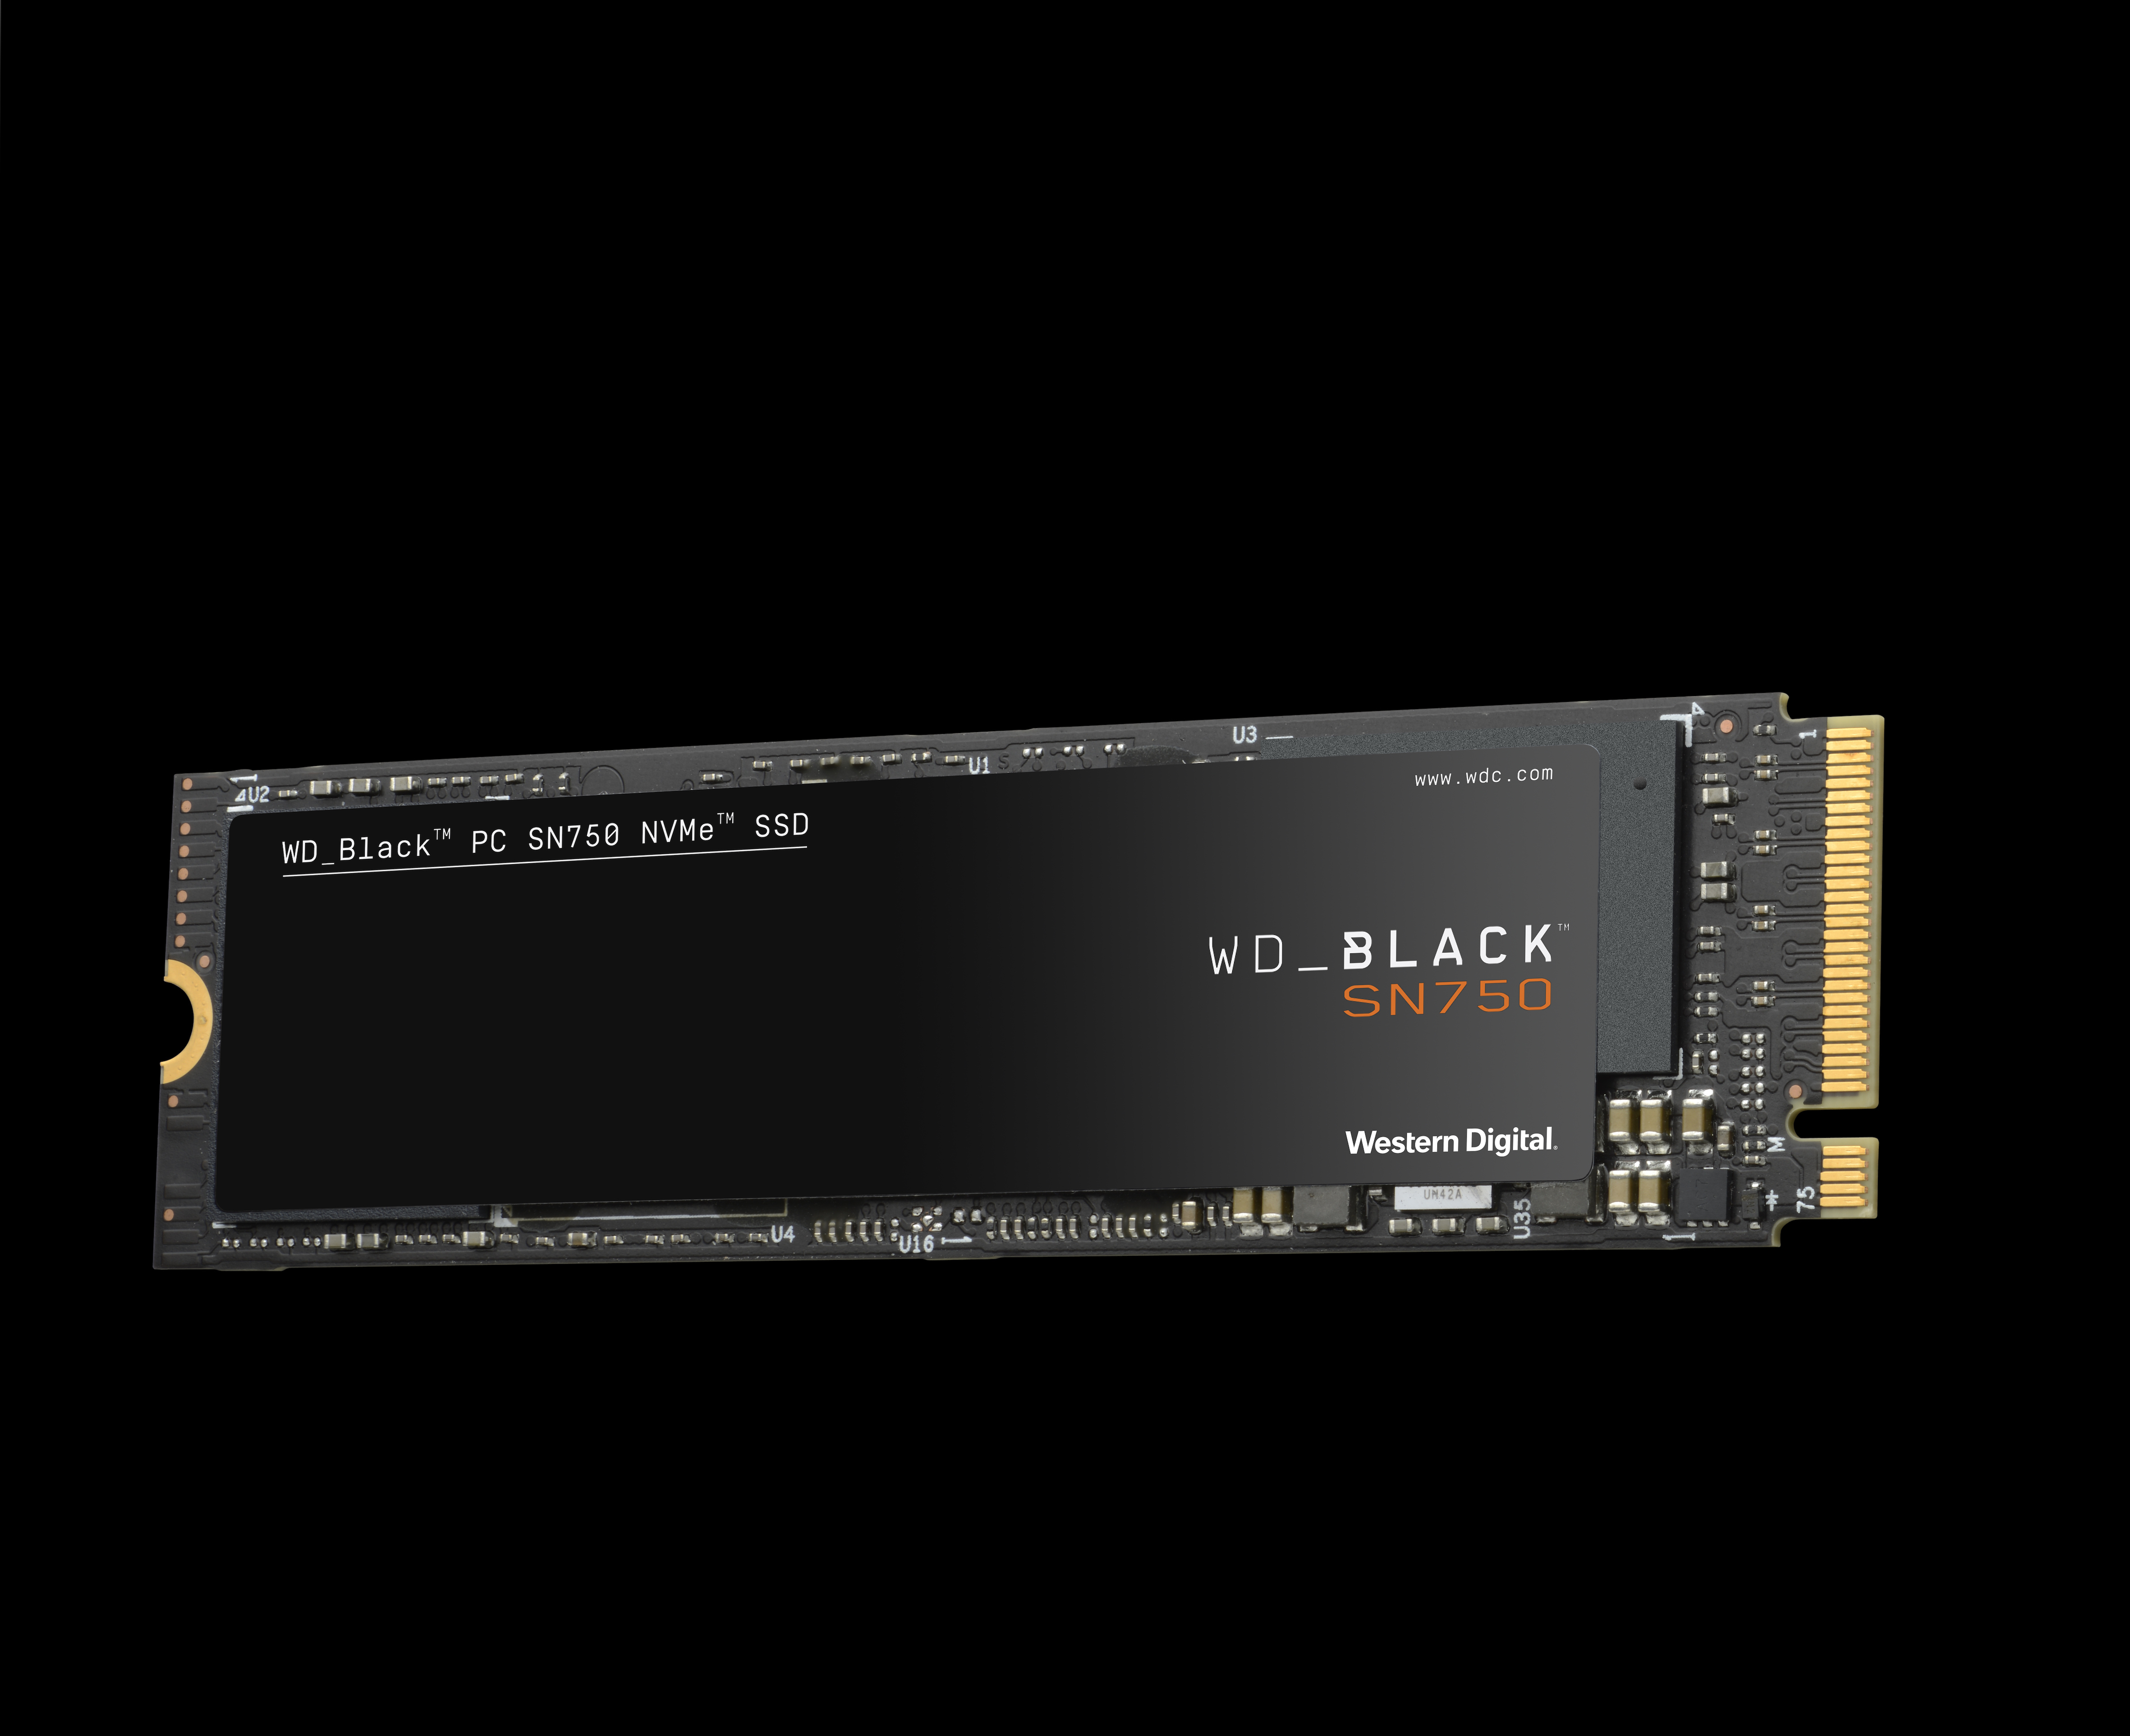 İkinci nesil WD Black SN750 NVMe SSD modeli duyuruldu